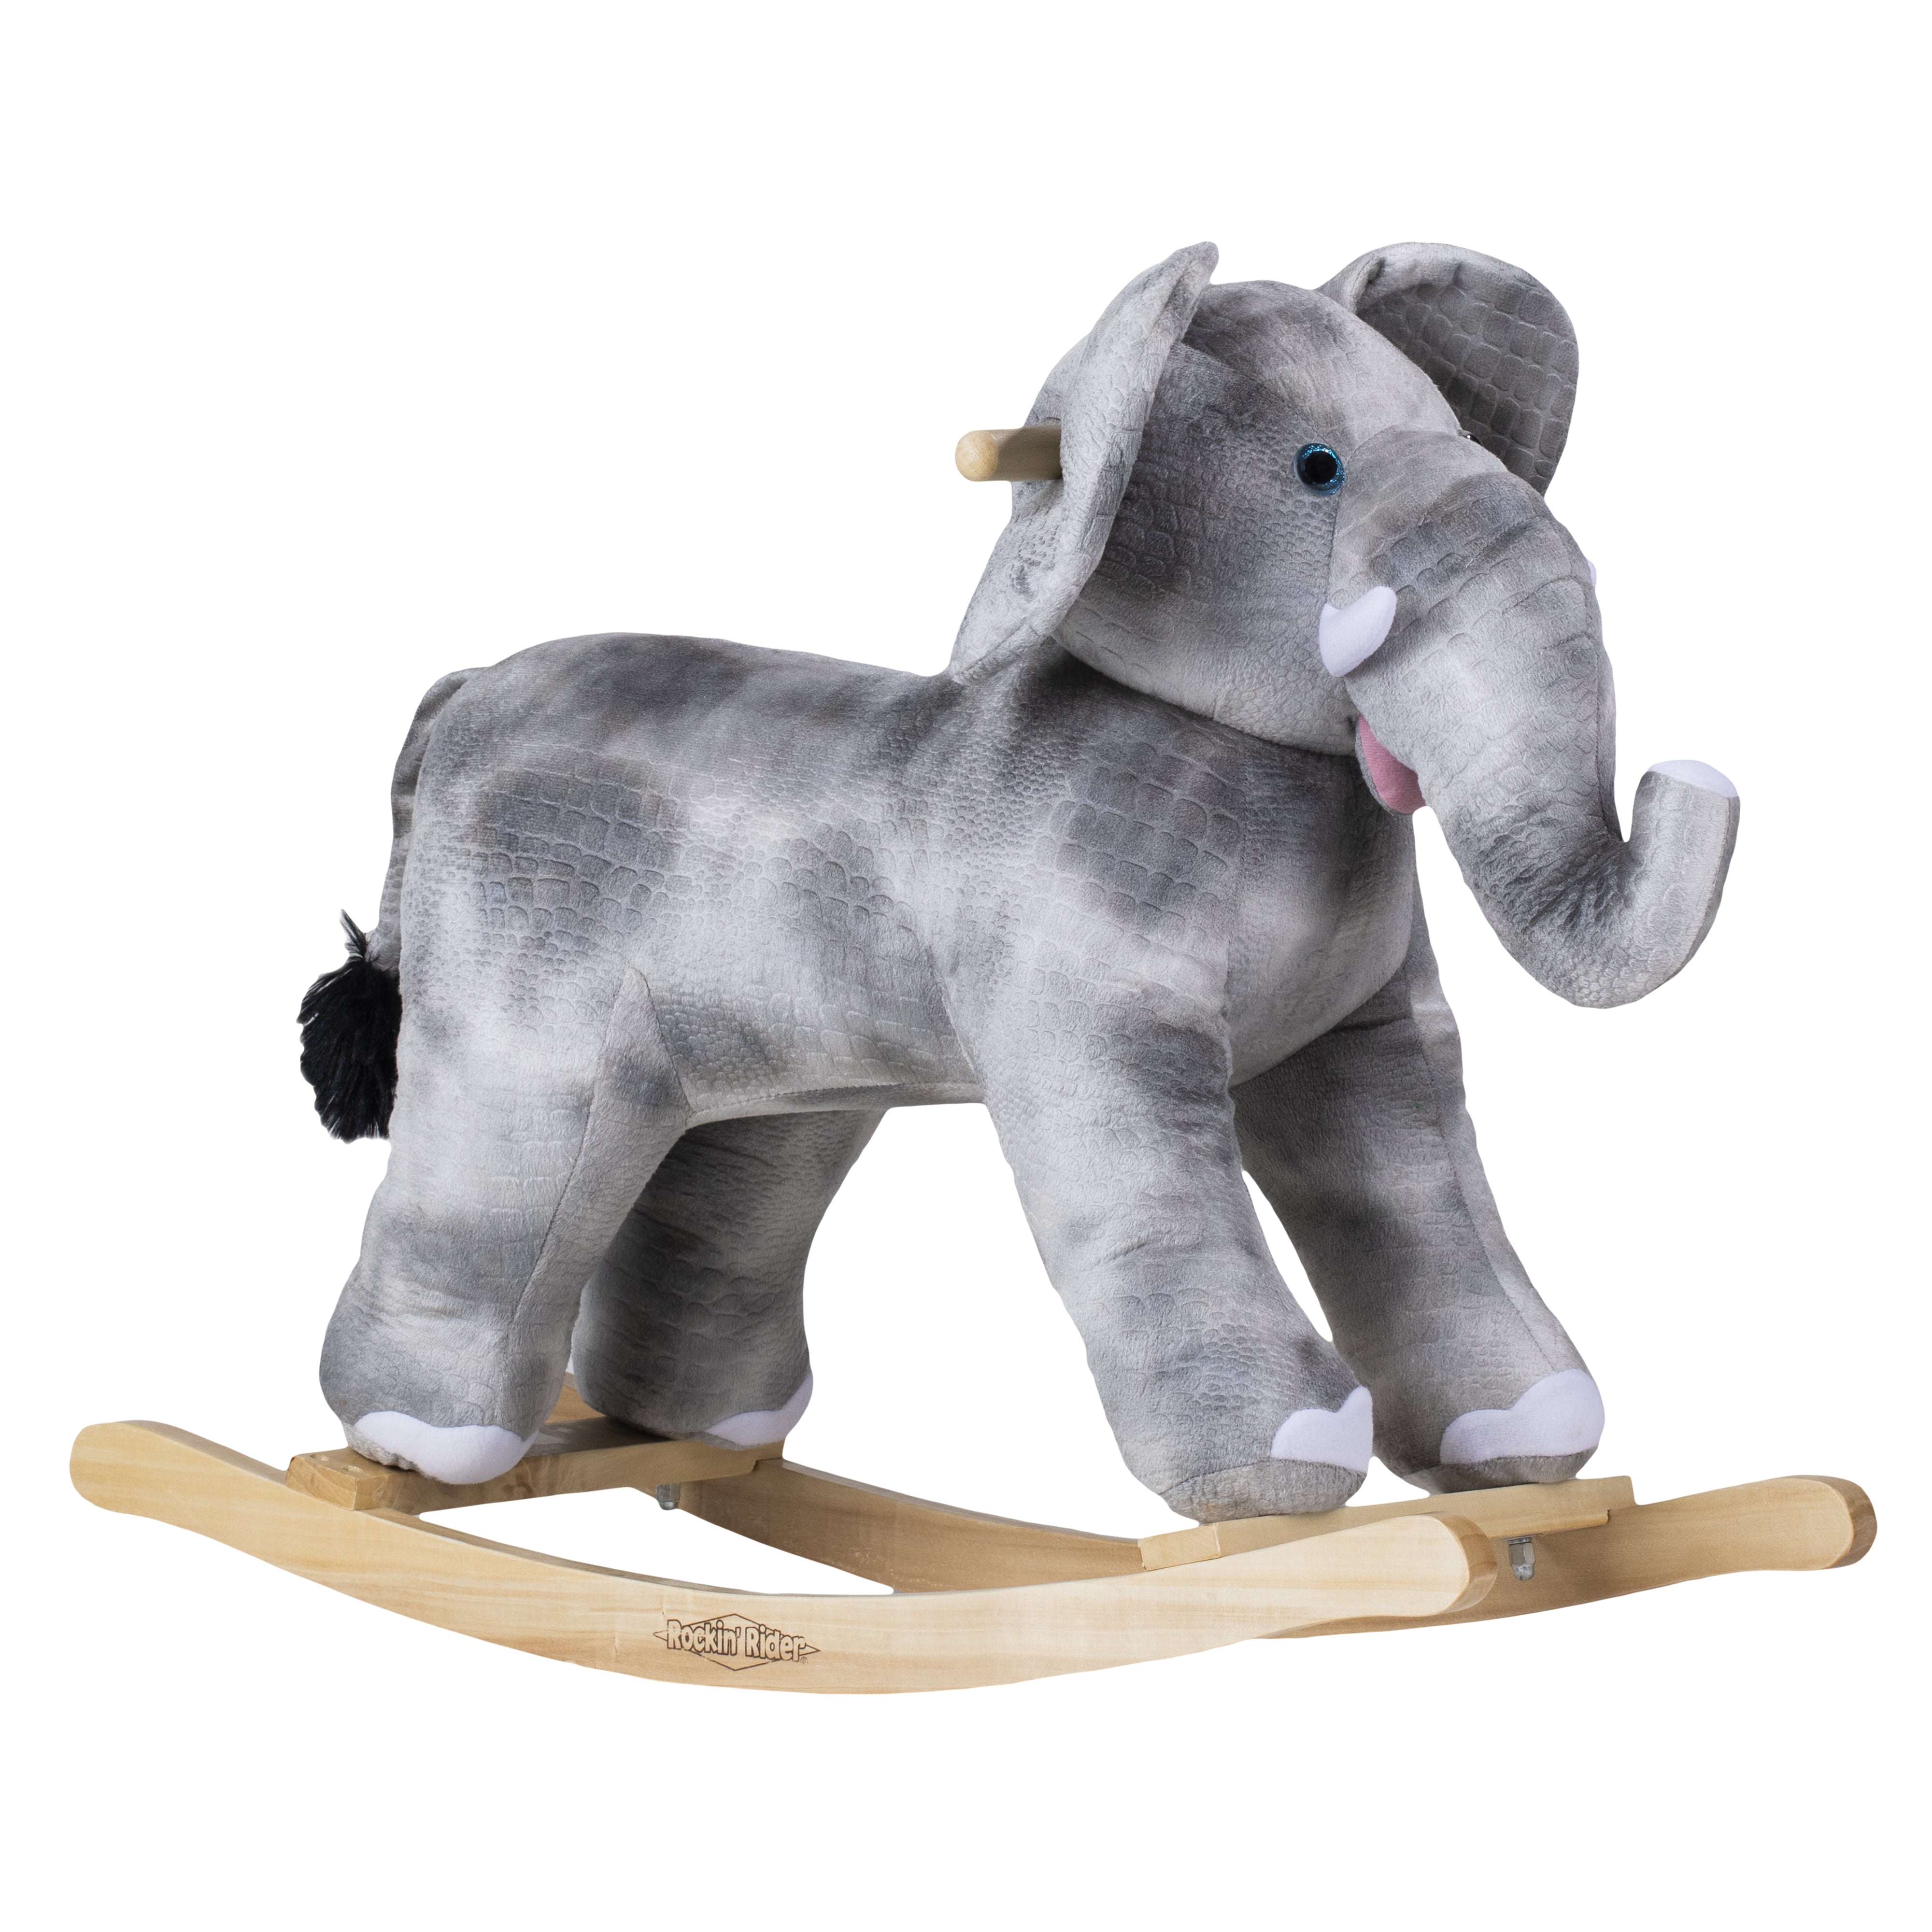 Kids Rocking Plush Elephant Character Rock Horse Ride On Toy Stuffed Soft 